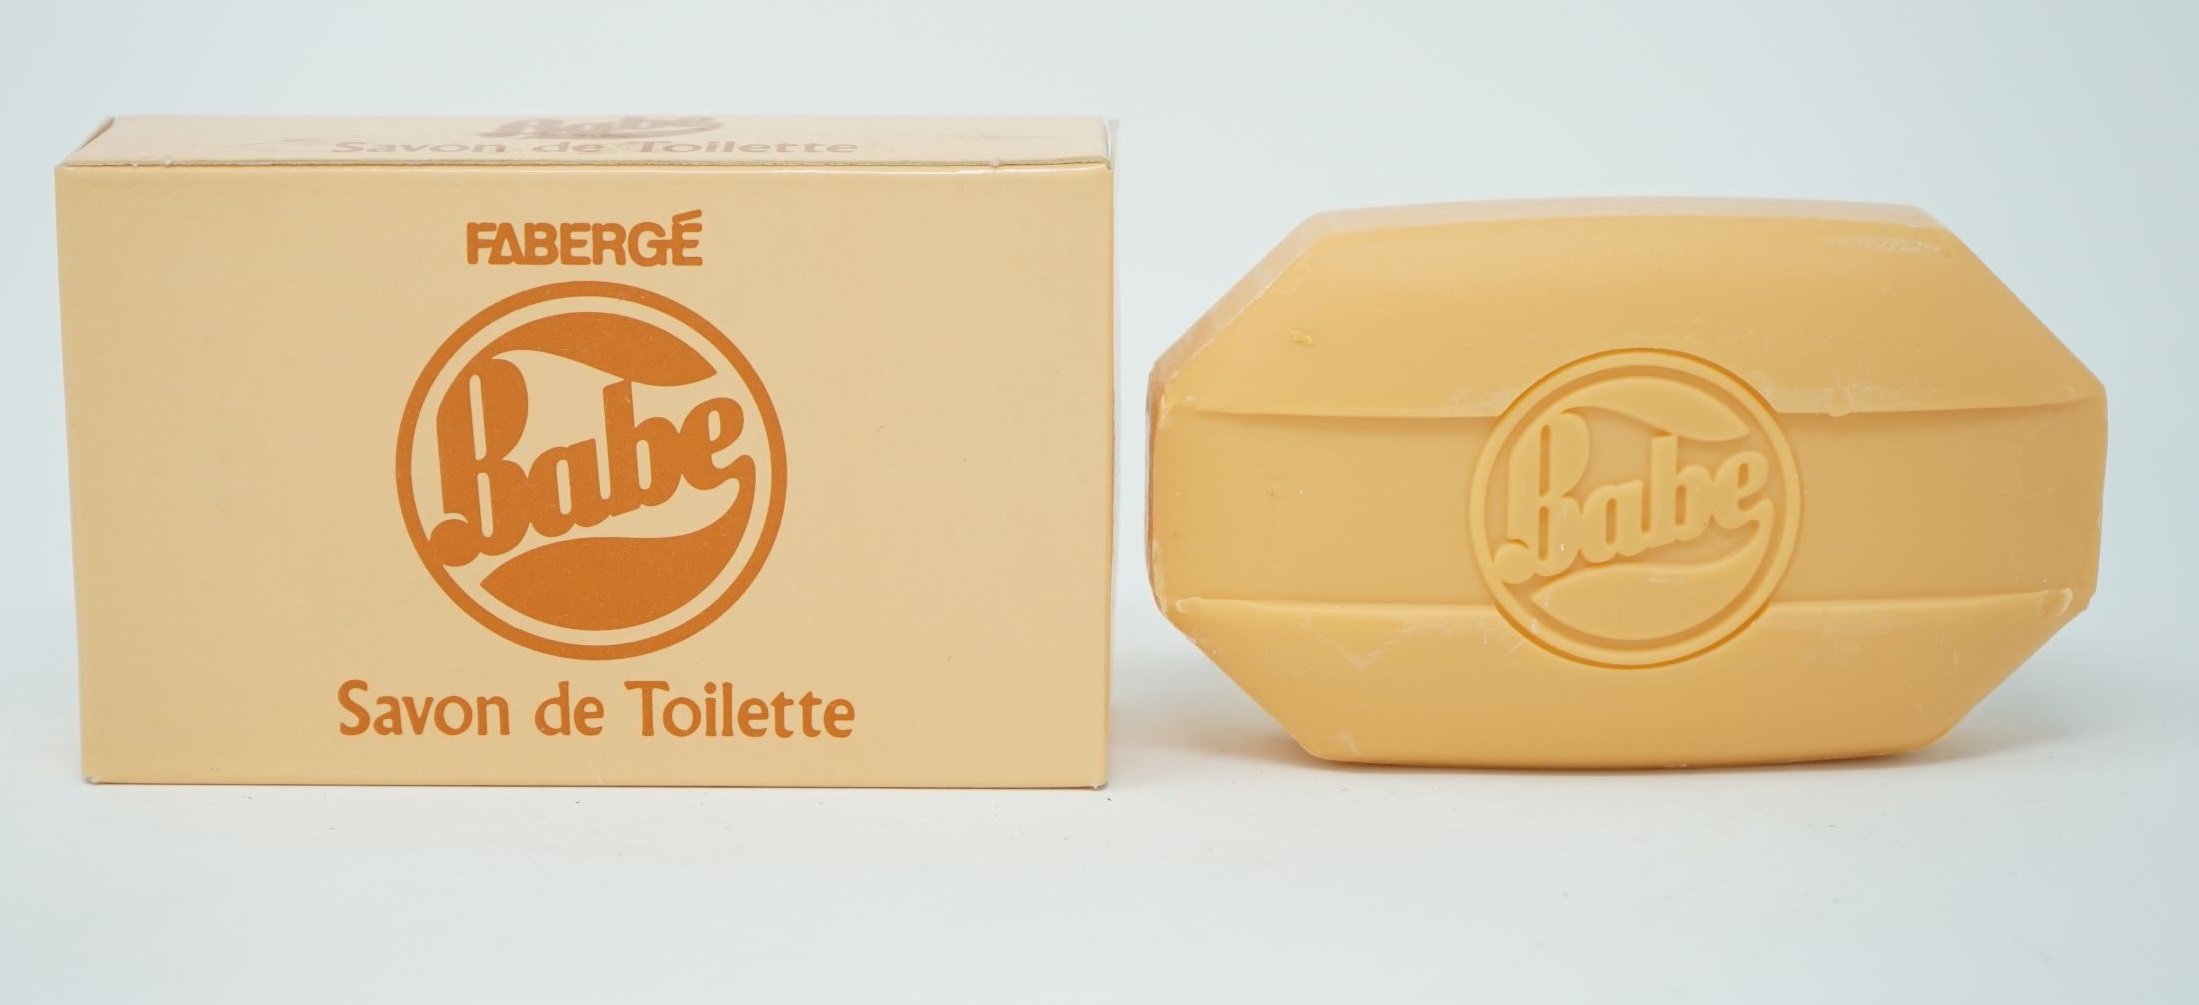 Faberge Babe Savon de Toilette 100 g